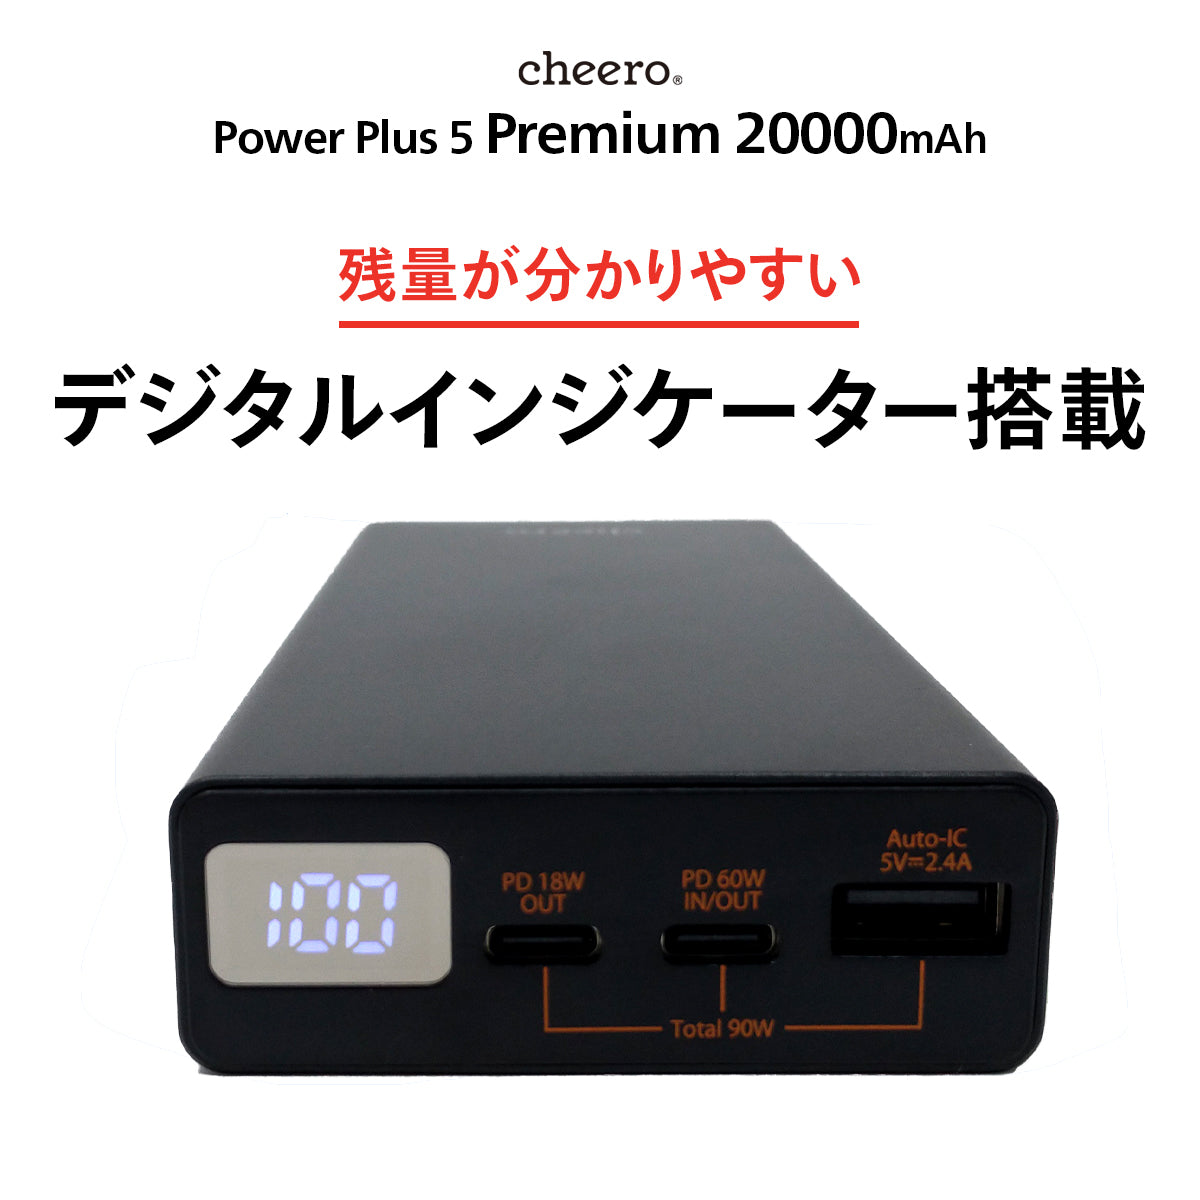 cheero Power Plus 5 Premium 20000mAh with Power Delivery 60W